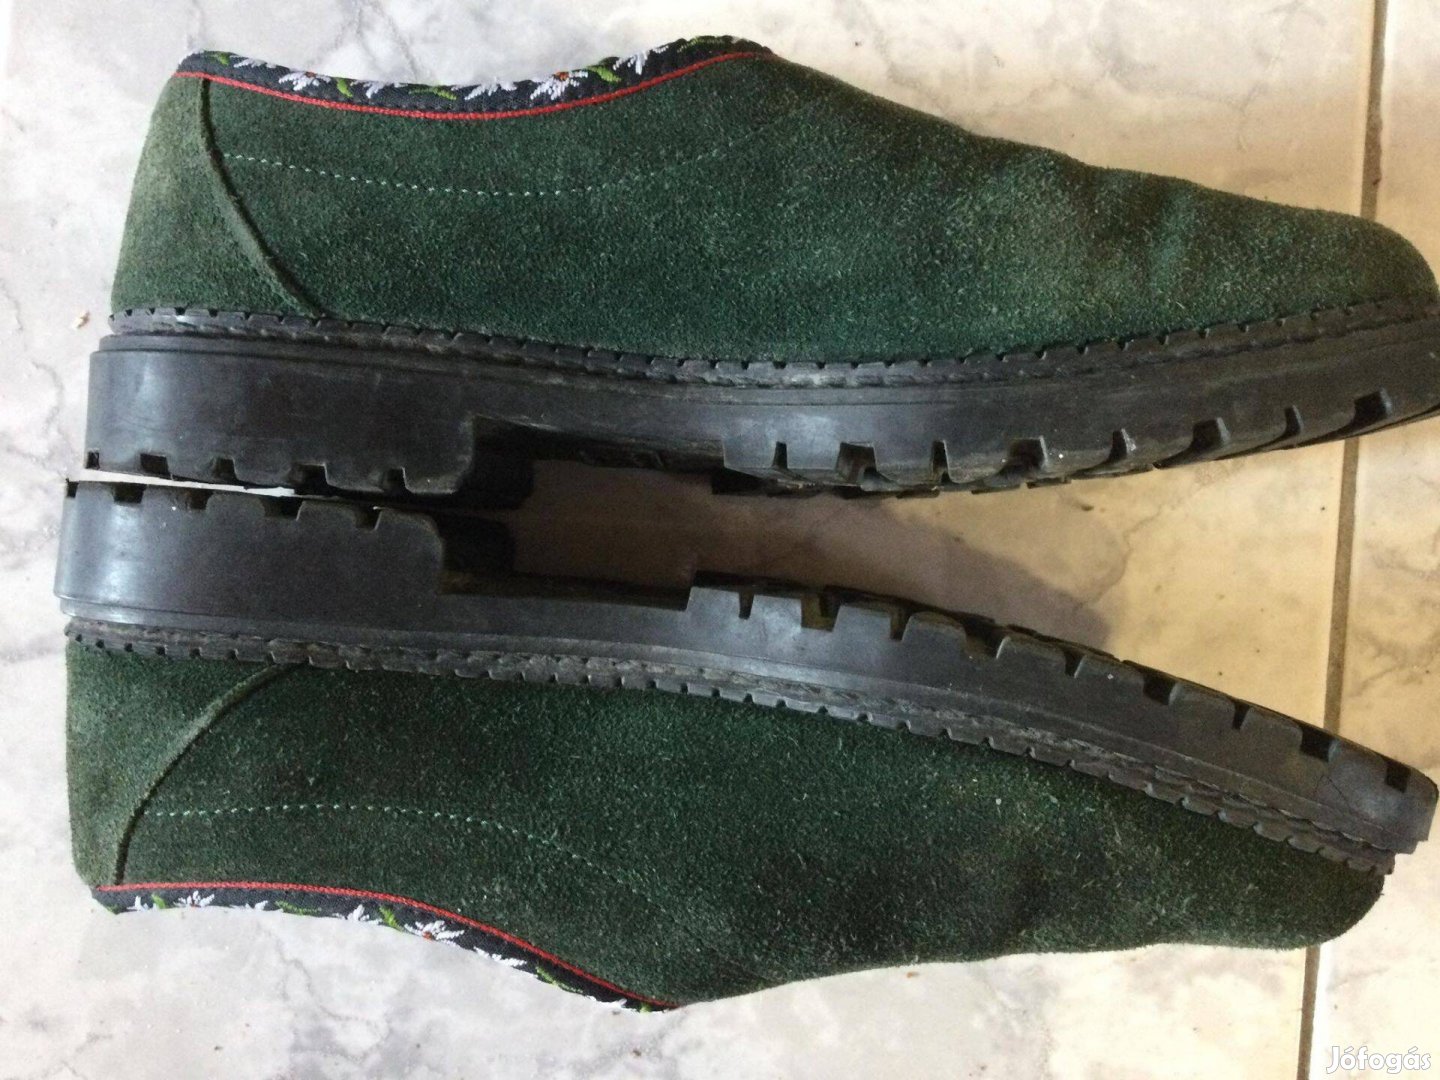 Eladó zöld olasz Blazer bőr cipő, minőségi darab, 40-es